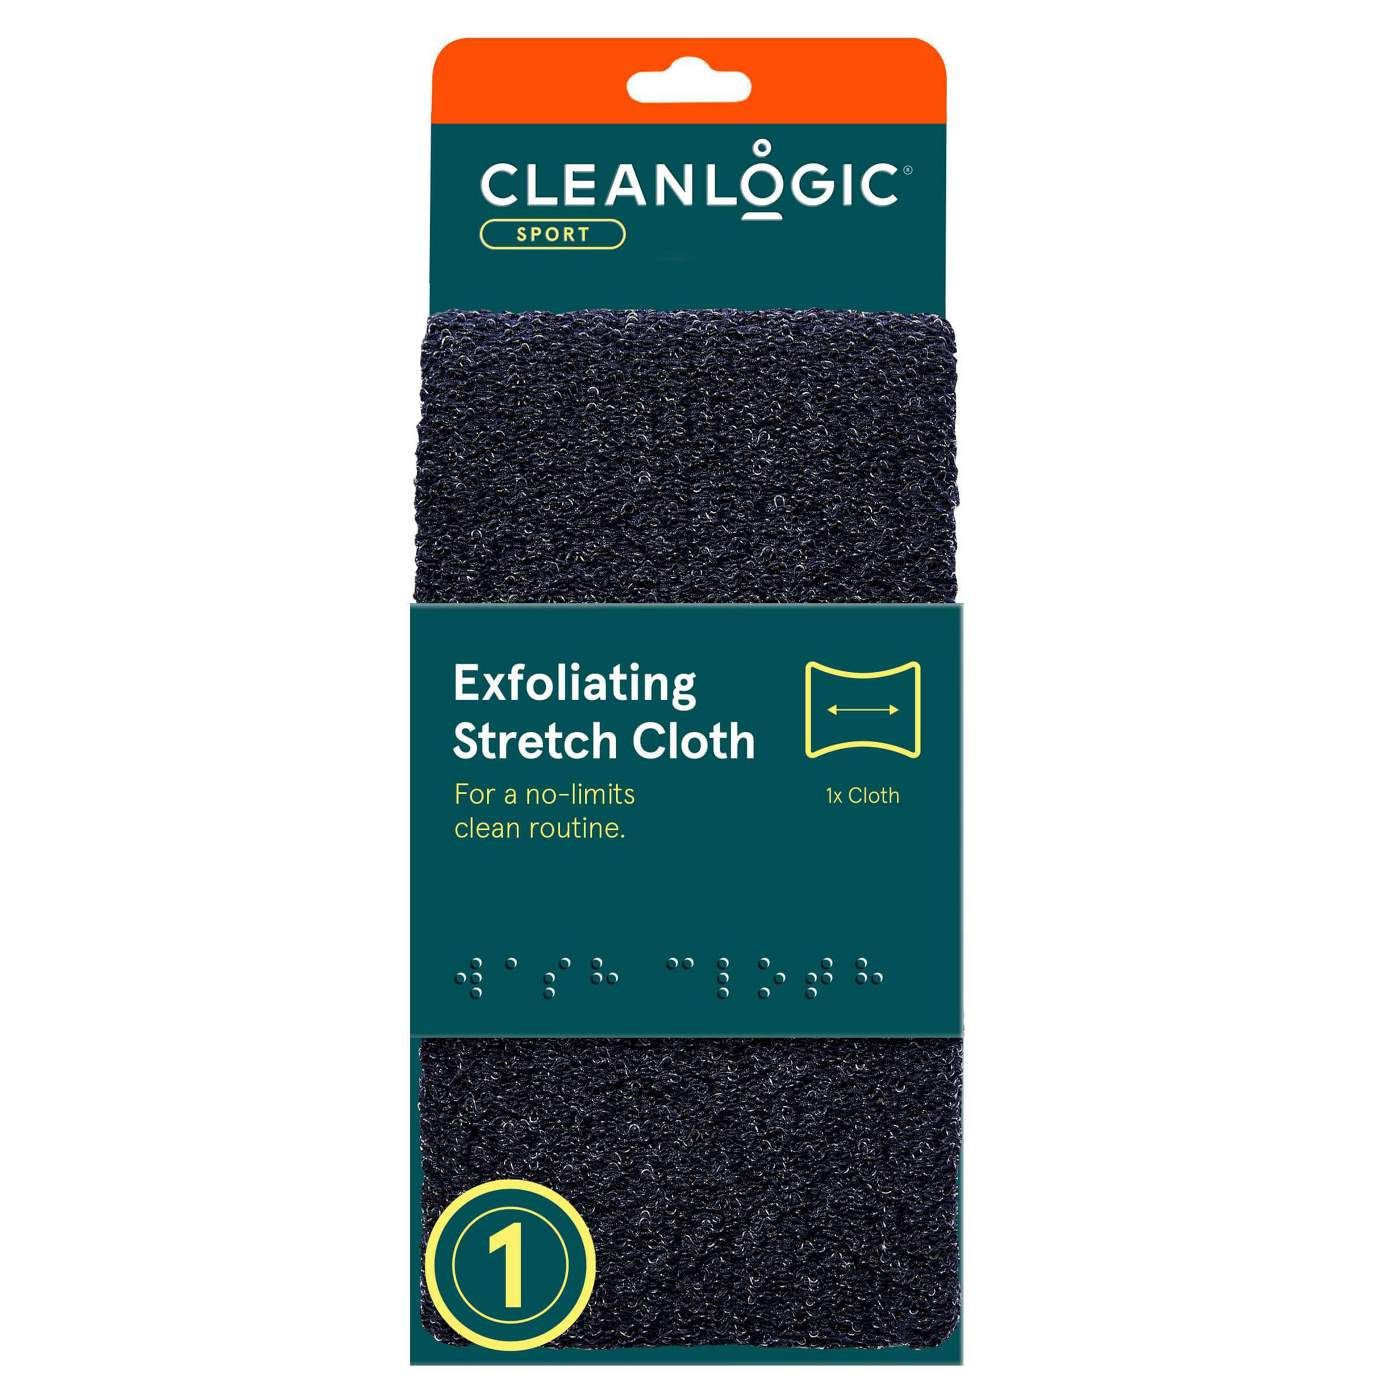 Cleanlogic Sport Exfoliating Stretch Cloth; image 1 of 2